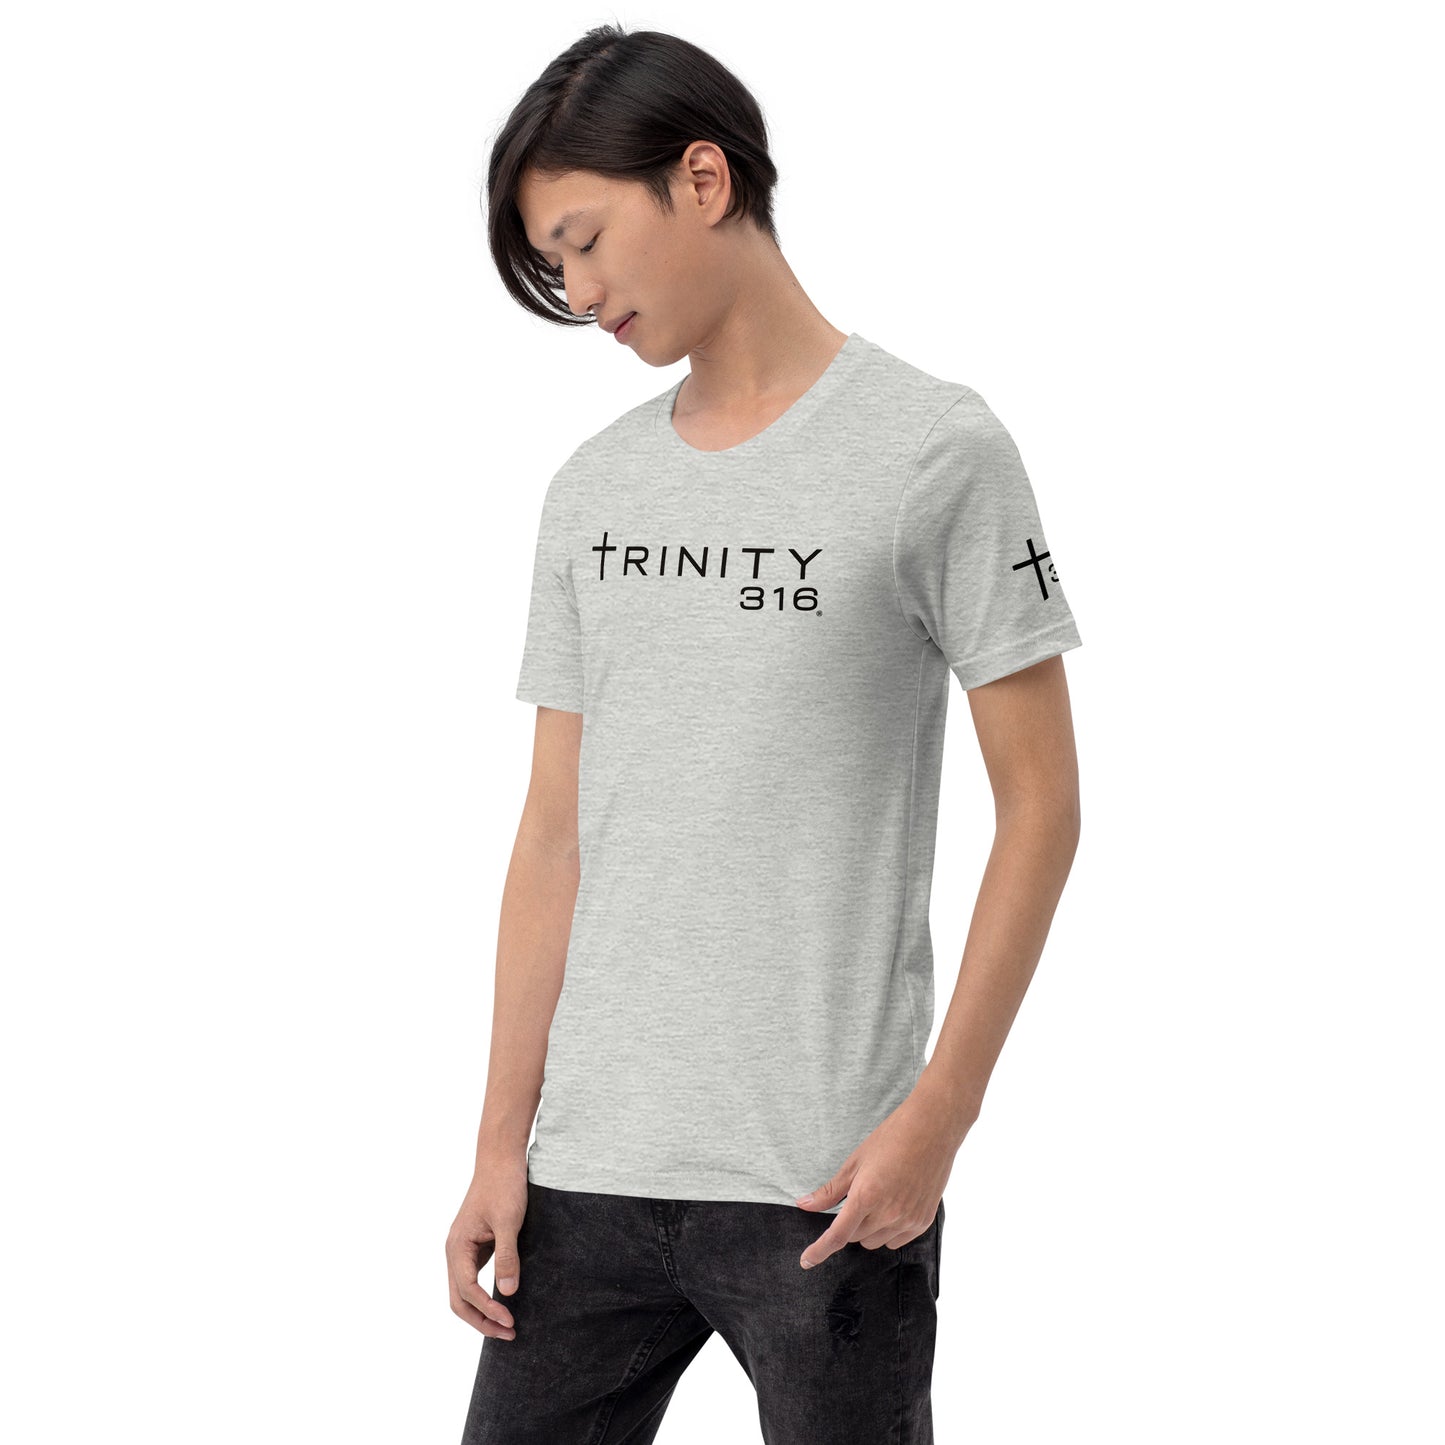 Trinity 316 T-Shirt - Grey Heather